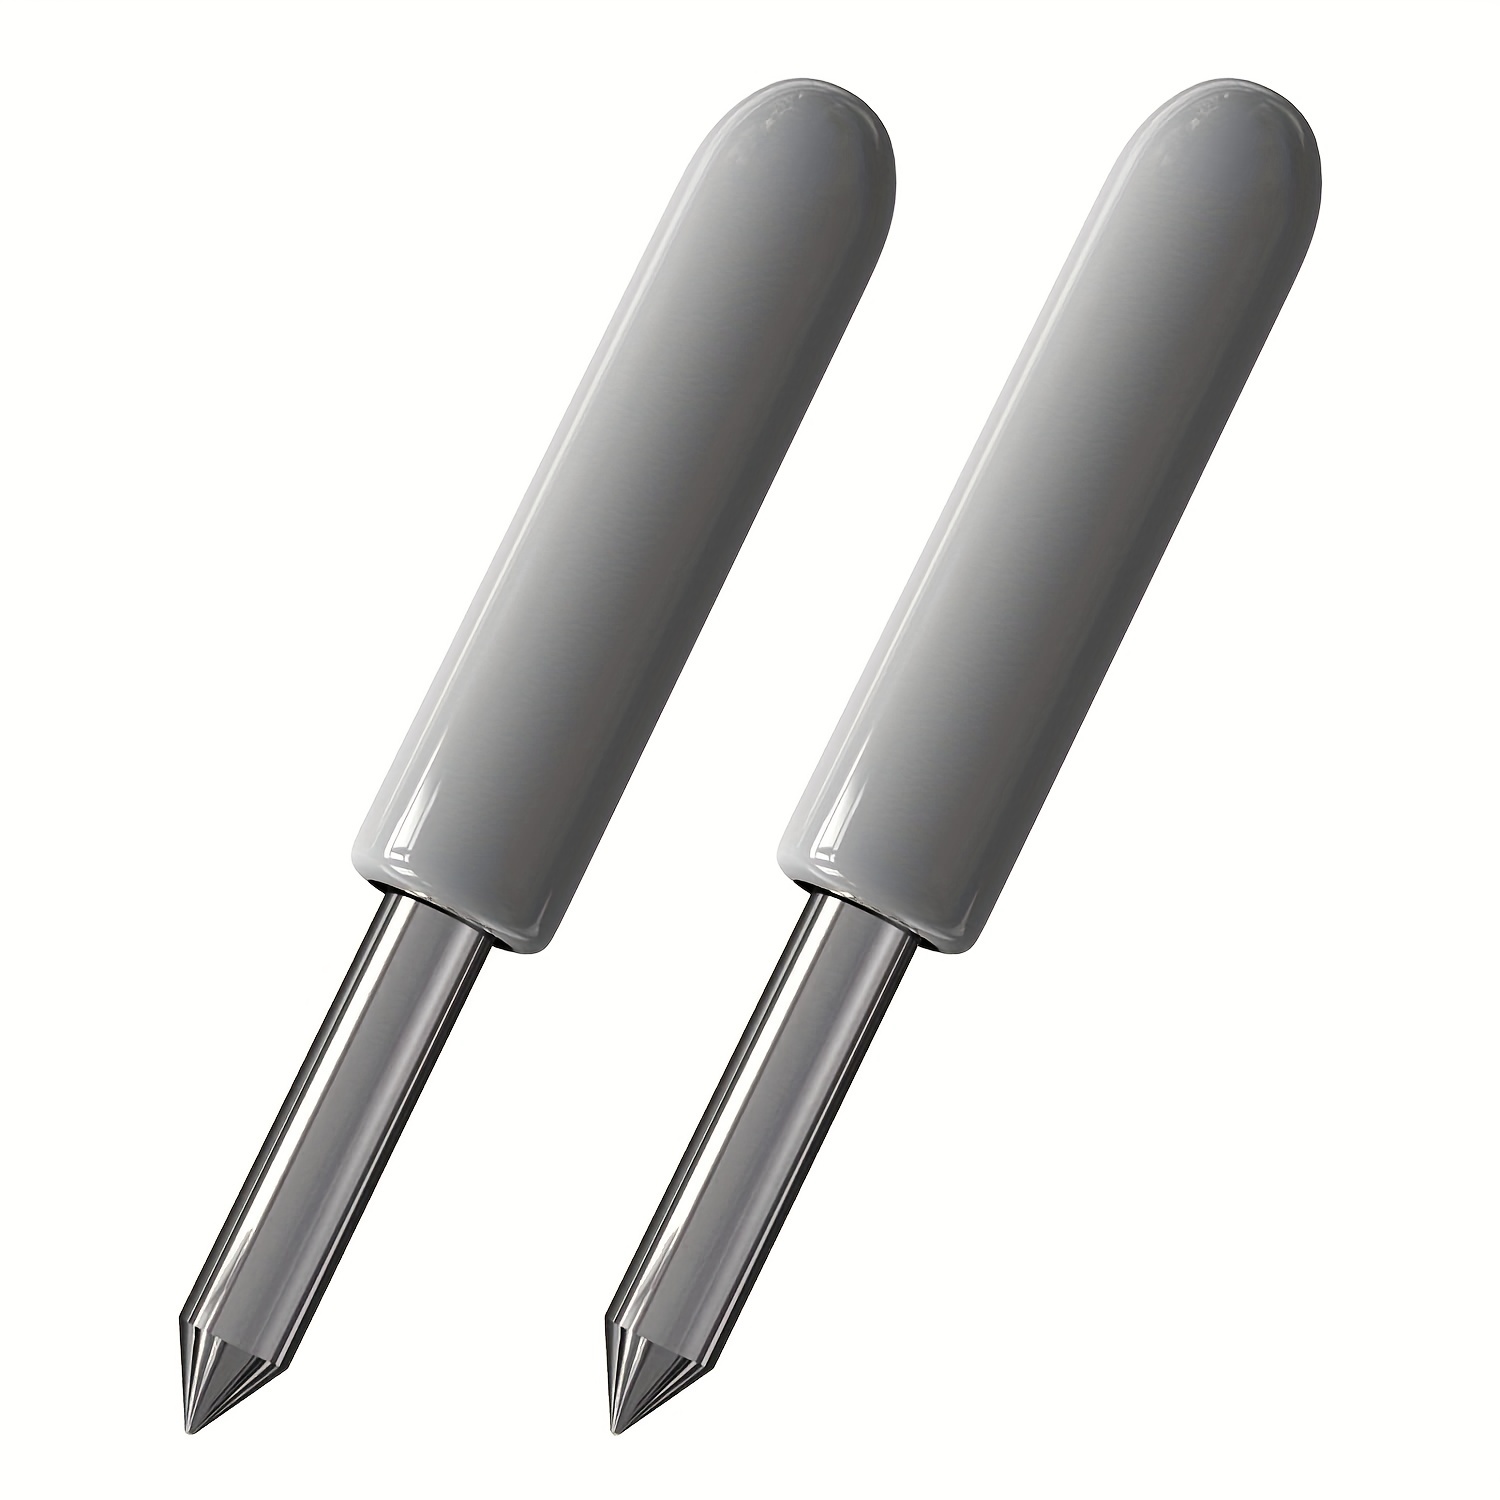 Knife Blade And Drive Housing For Cricut Maker Cricut Tool Set